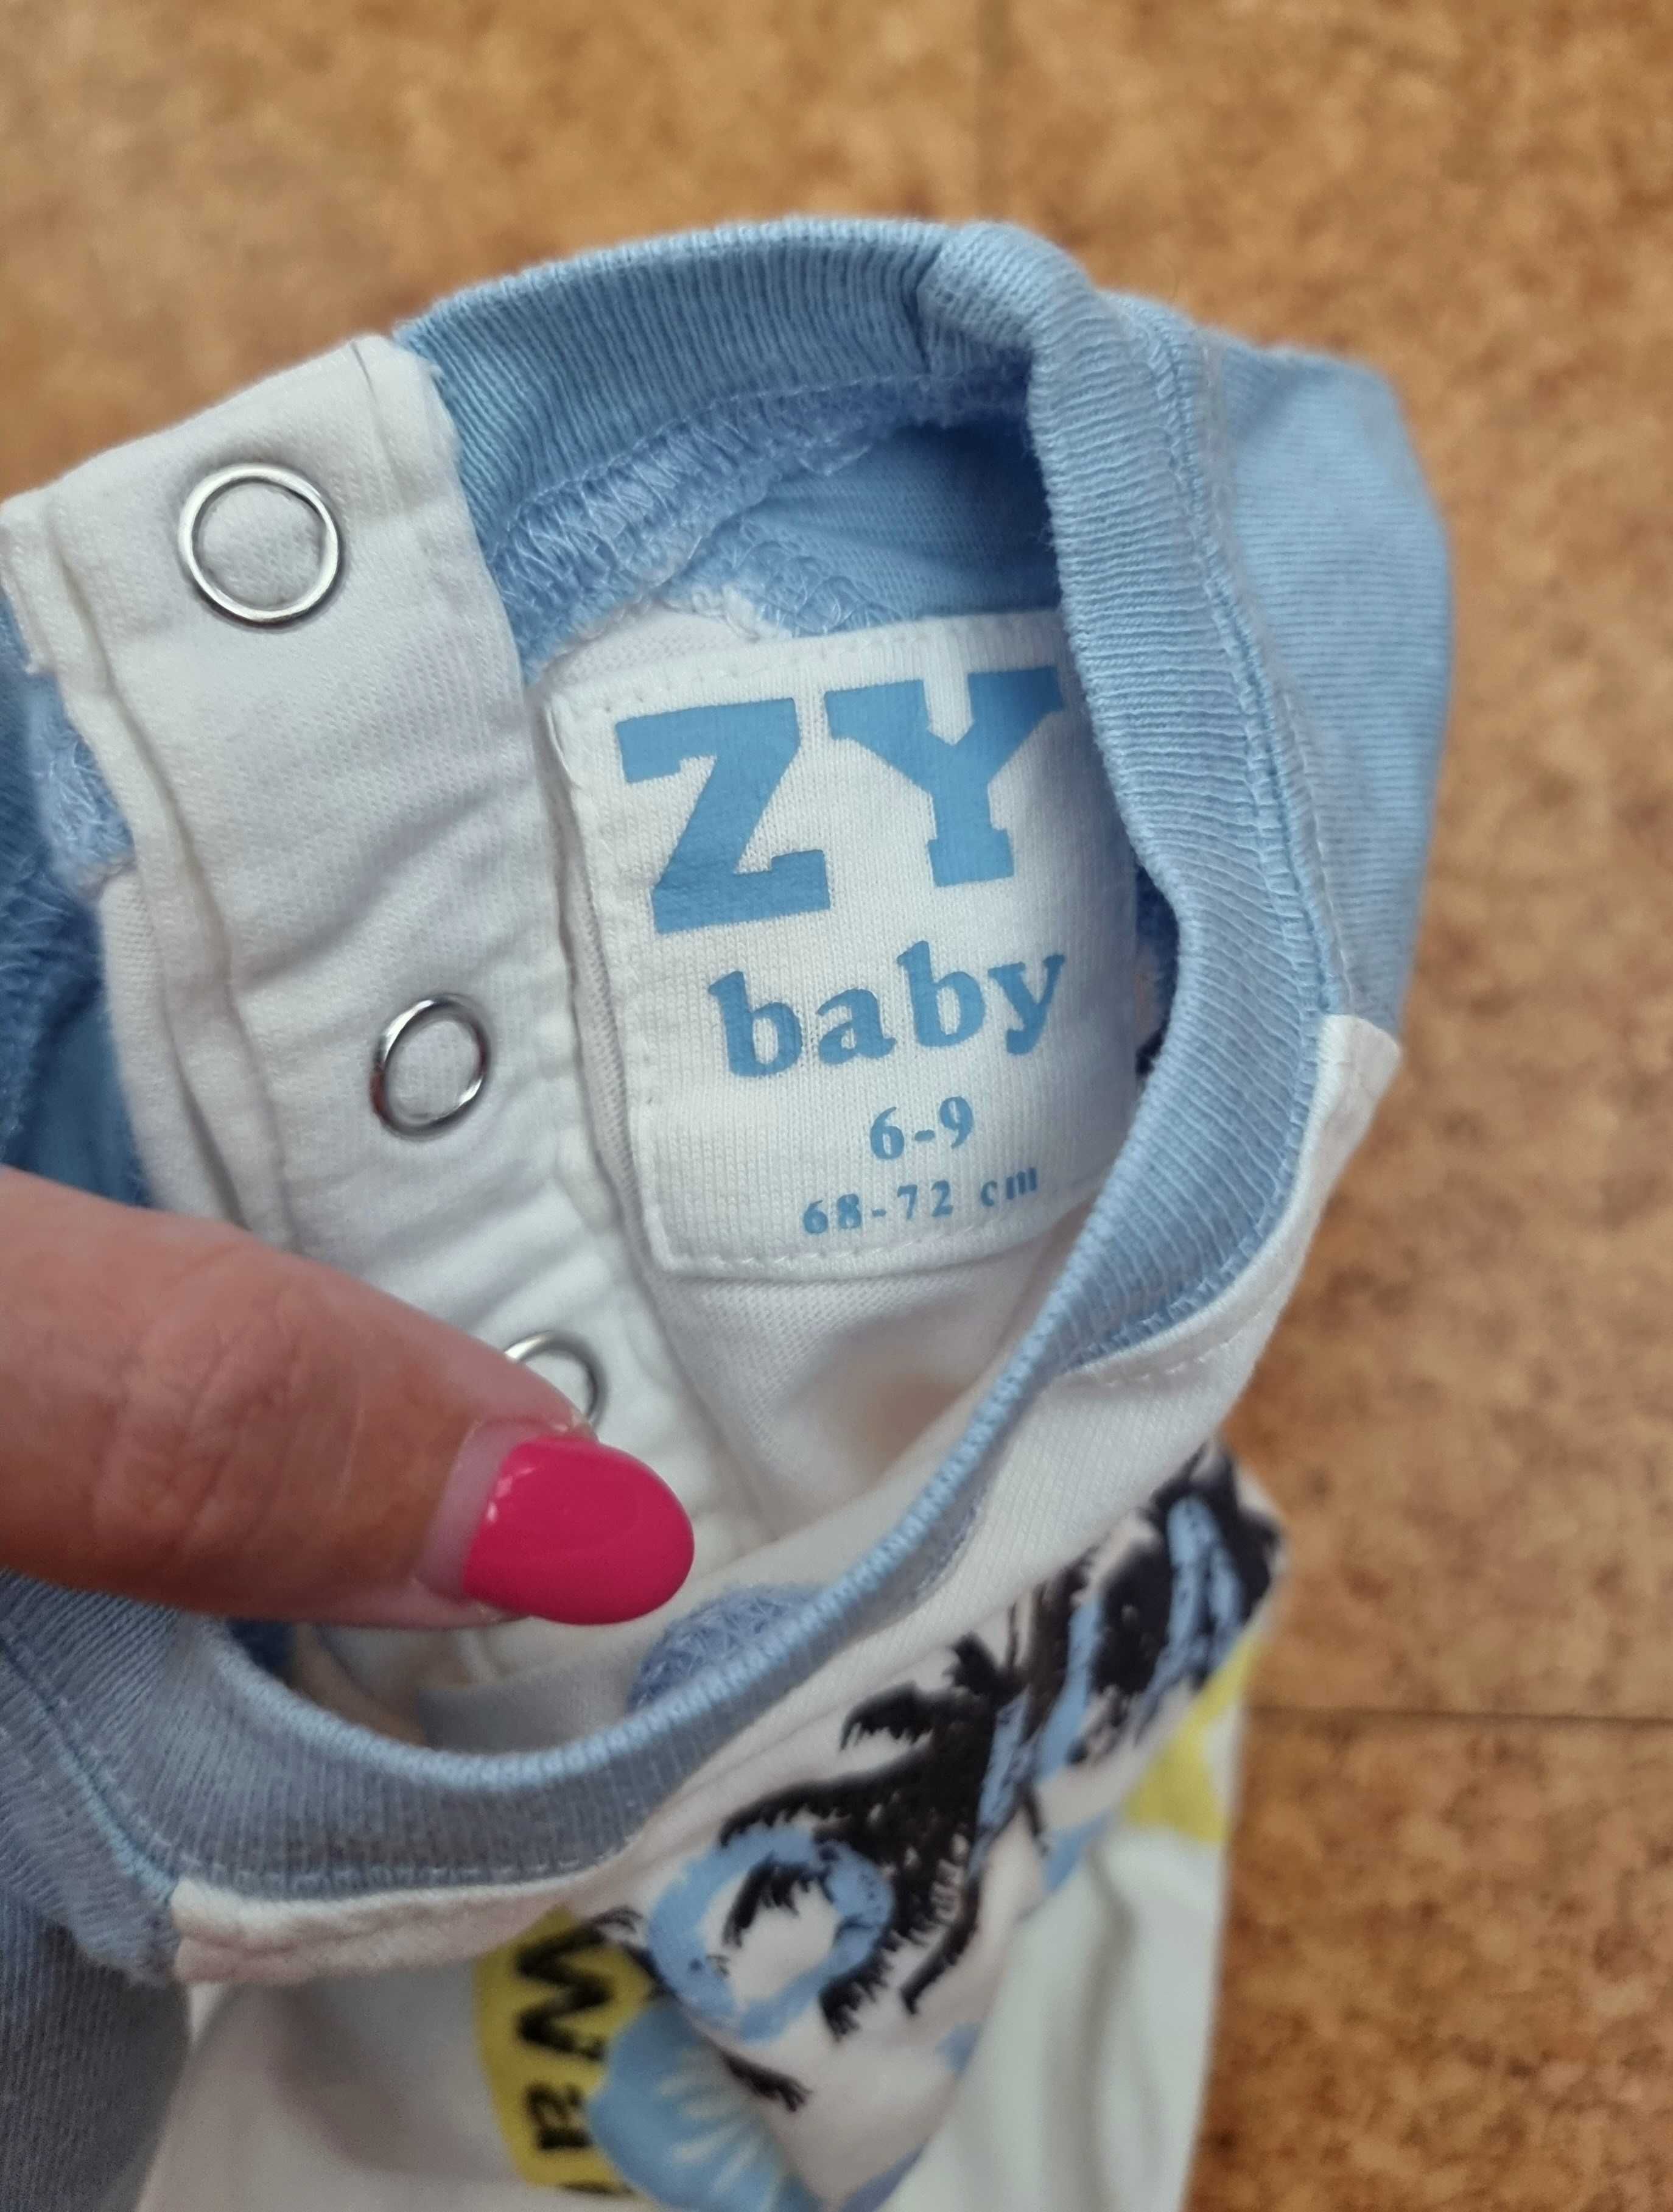 T-shirt azul e branca Aloha Waikiki Beach ZY Baby, 6-9 meses